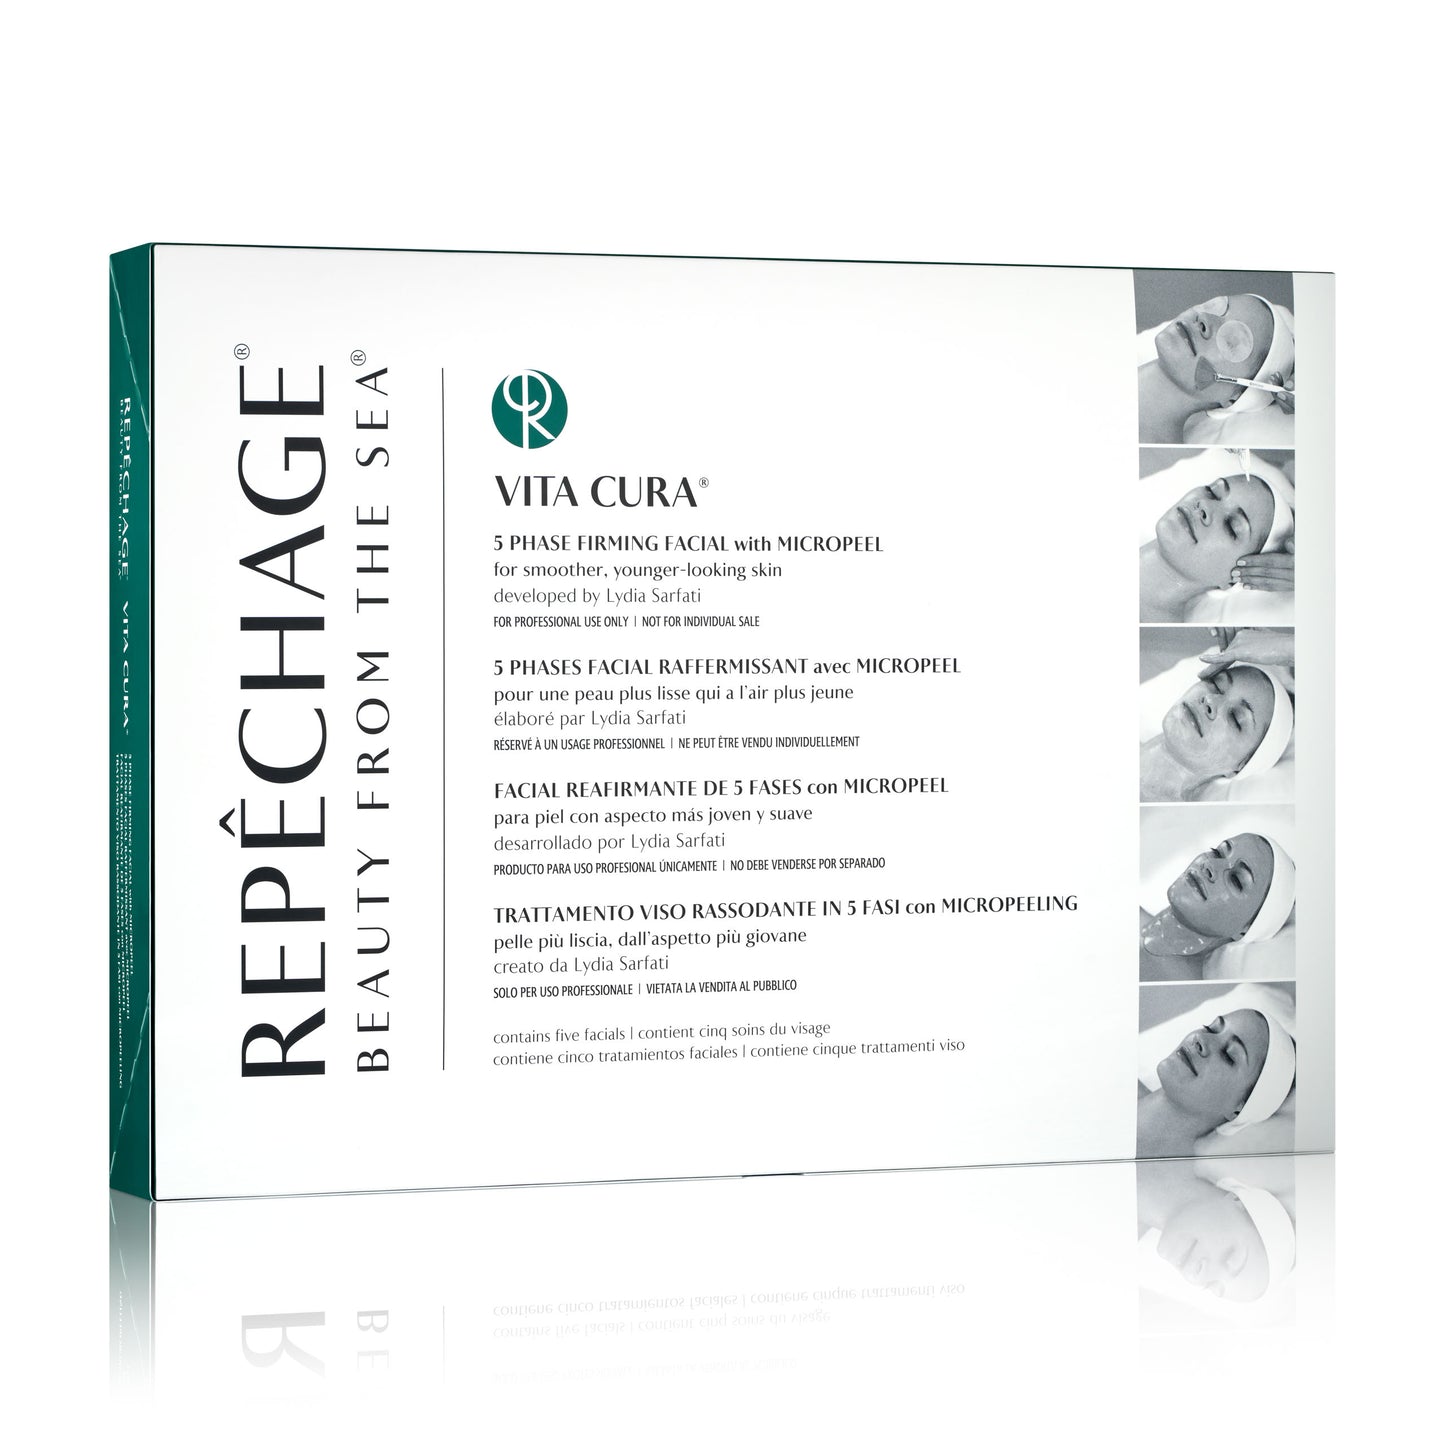 Repechage Vita Cura 5 Phase Firming Facial Kit, 5 Treatments